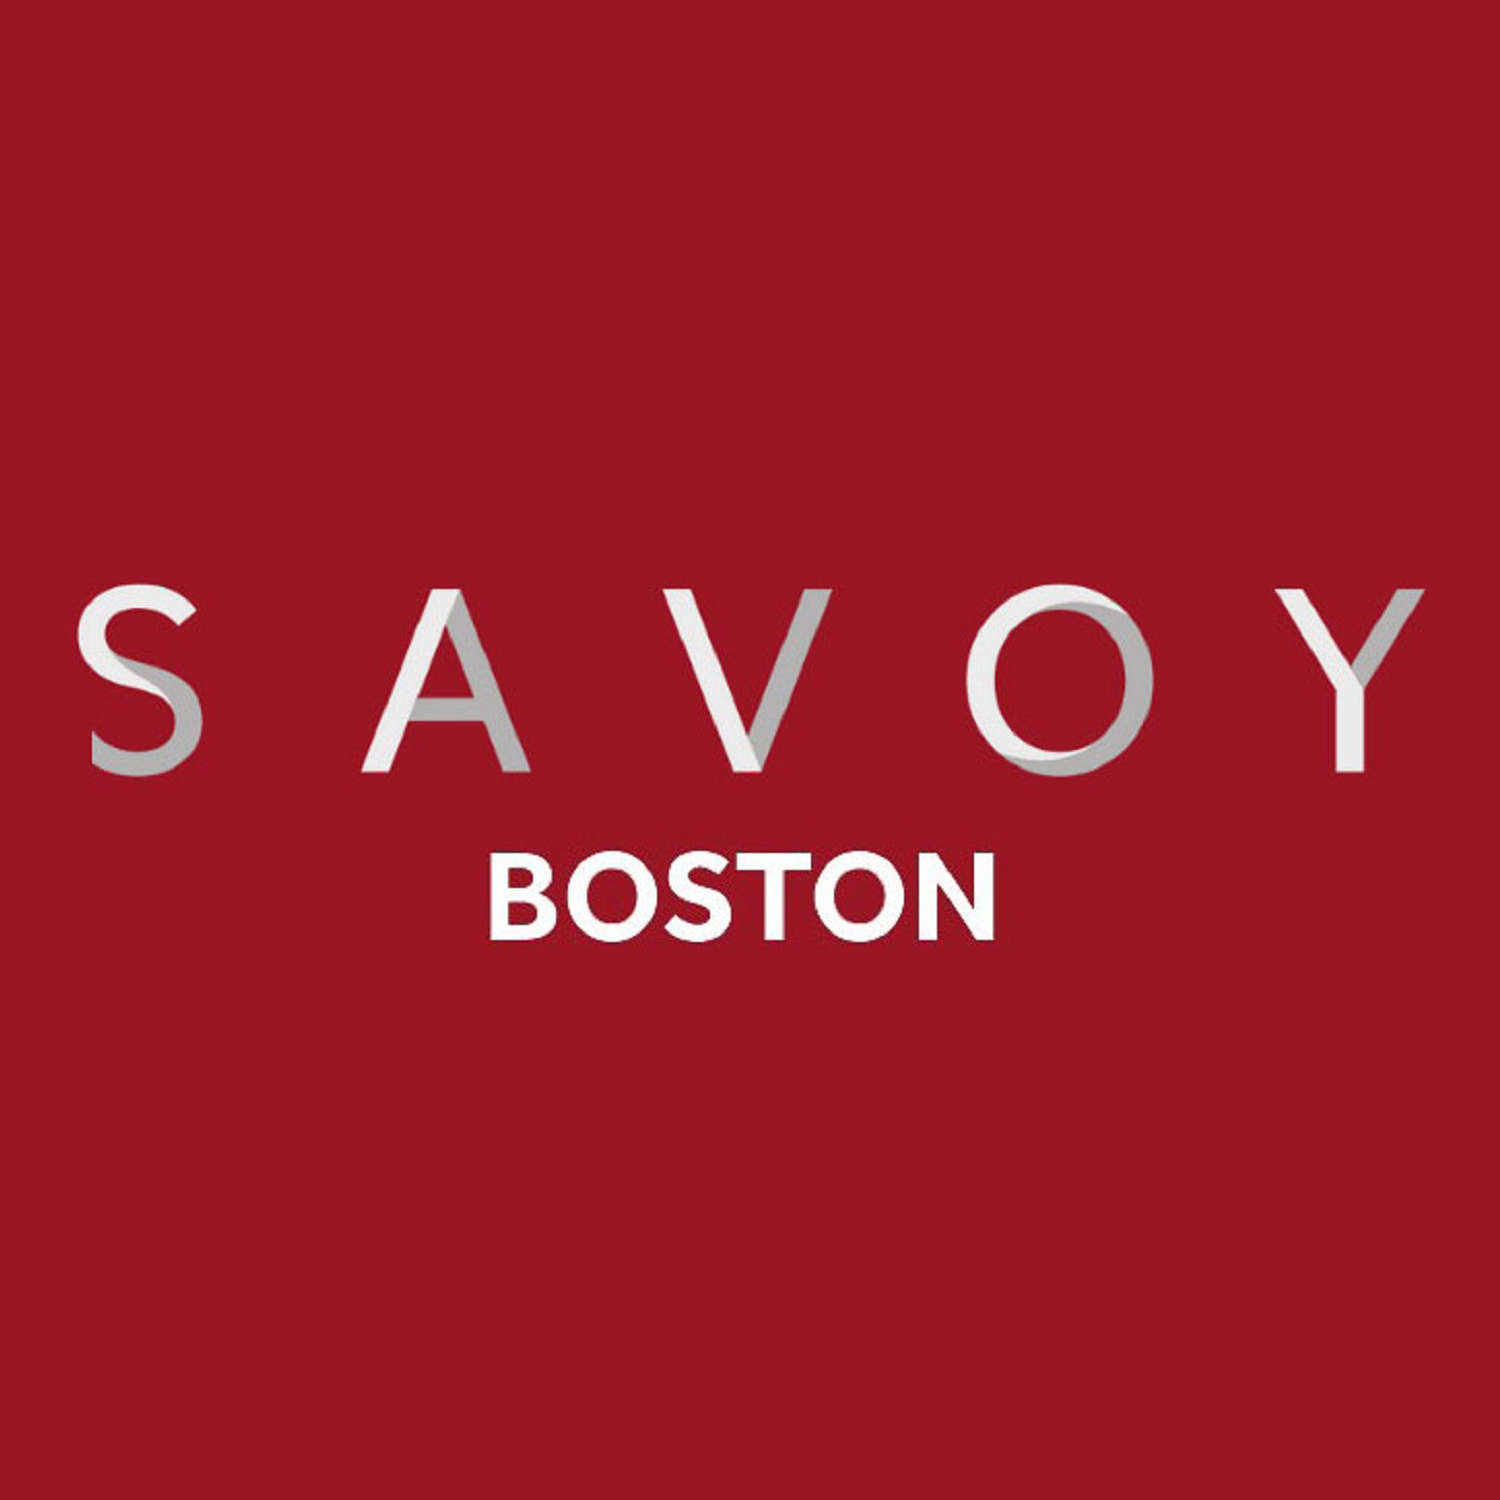 Savoy Cinema, Boston logo